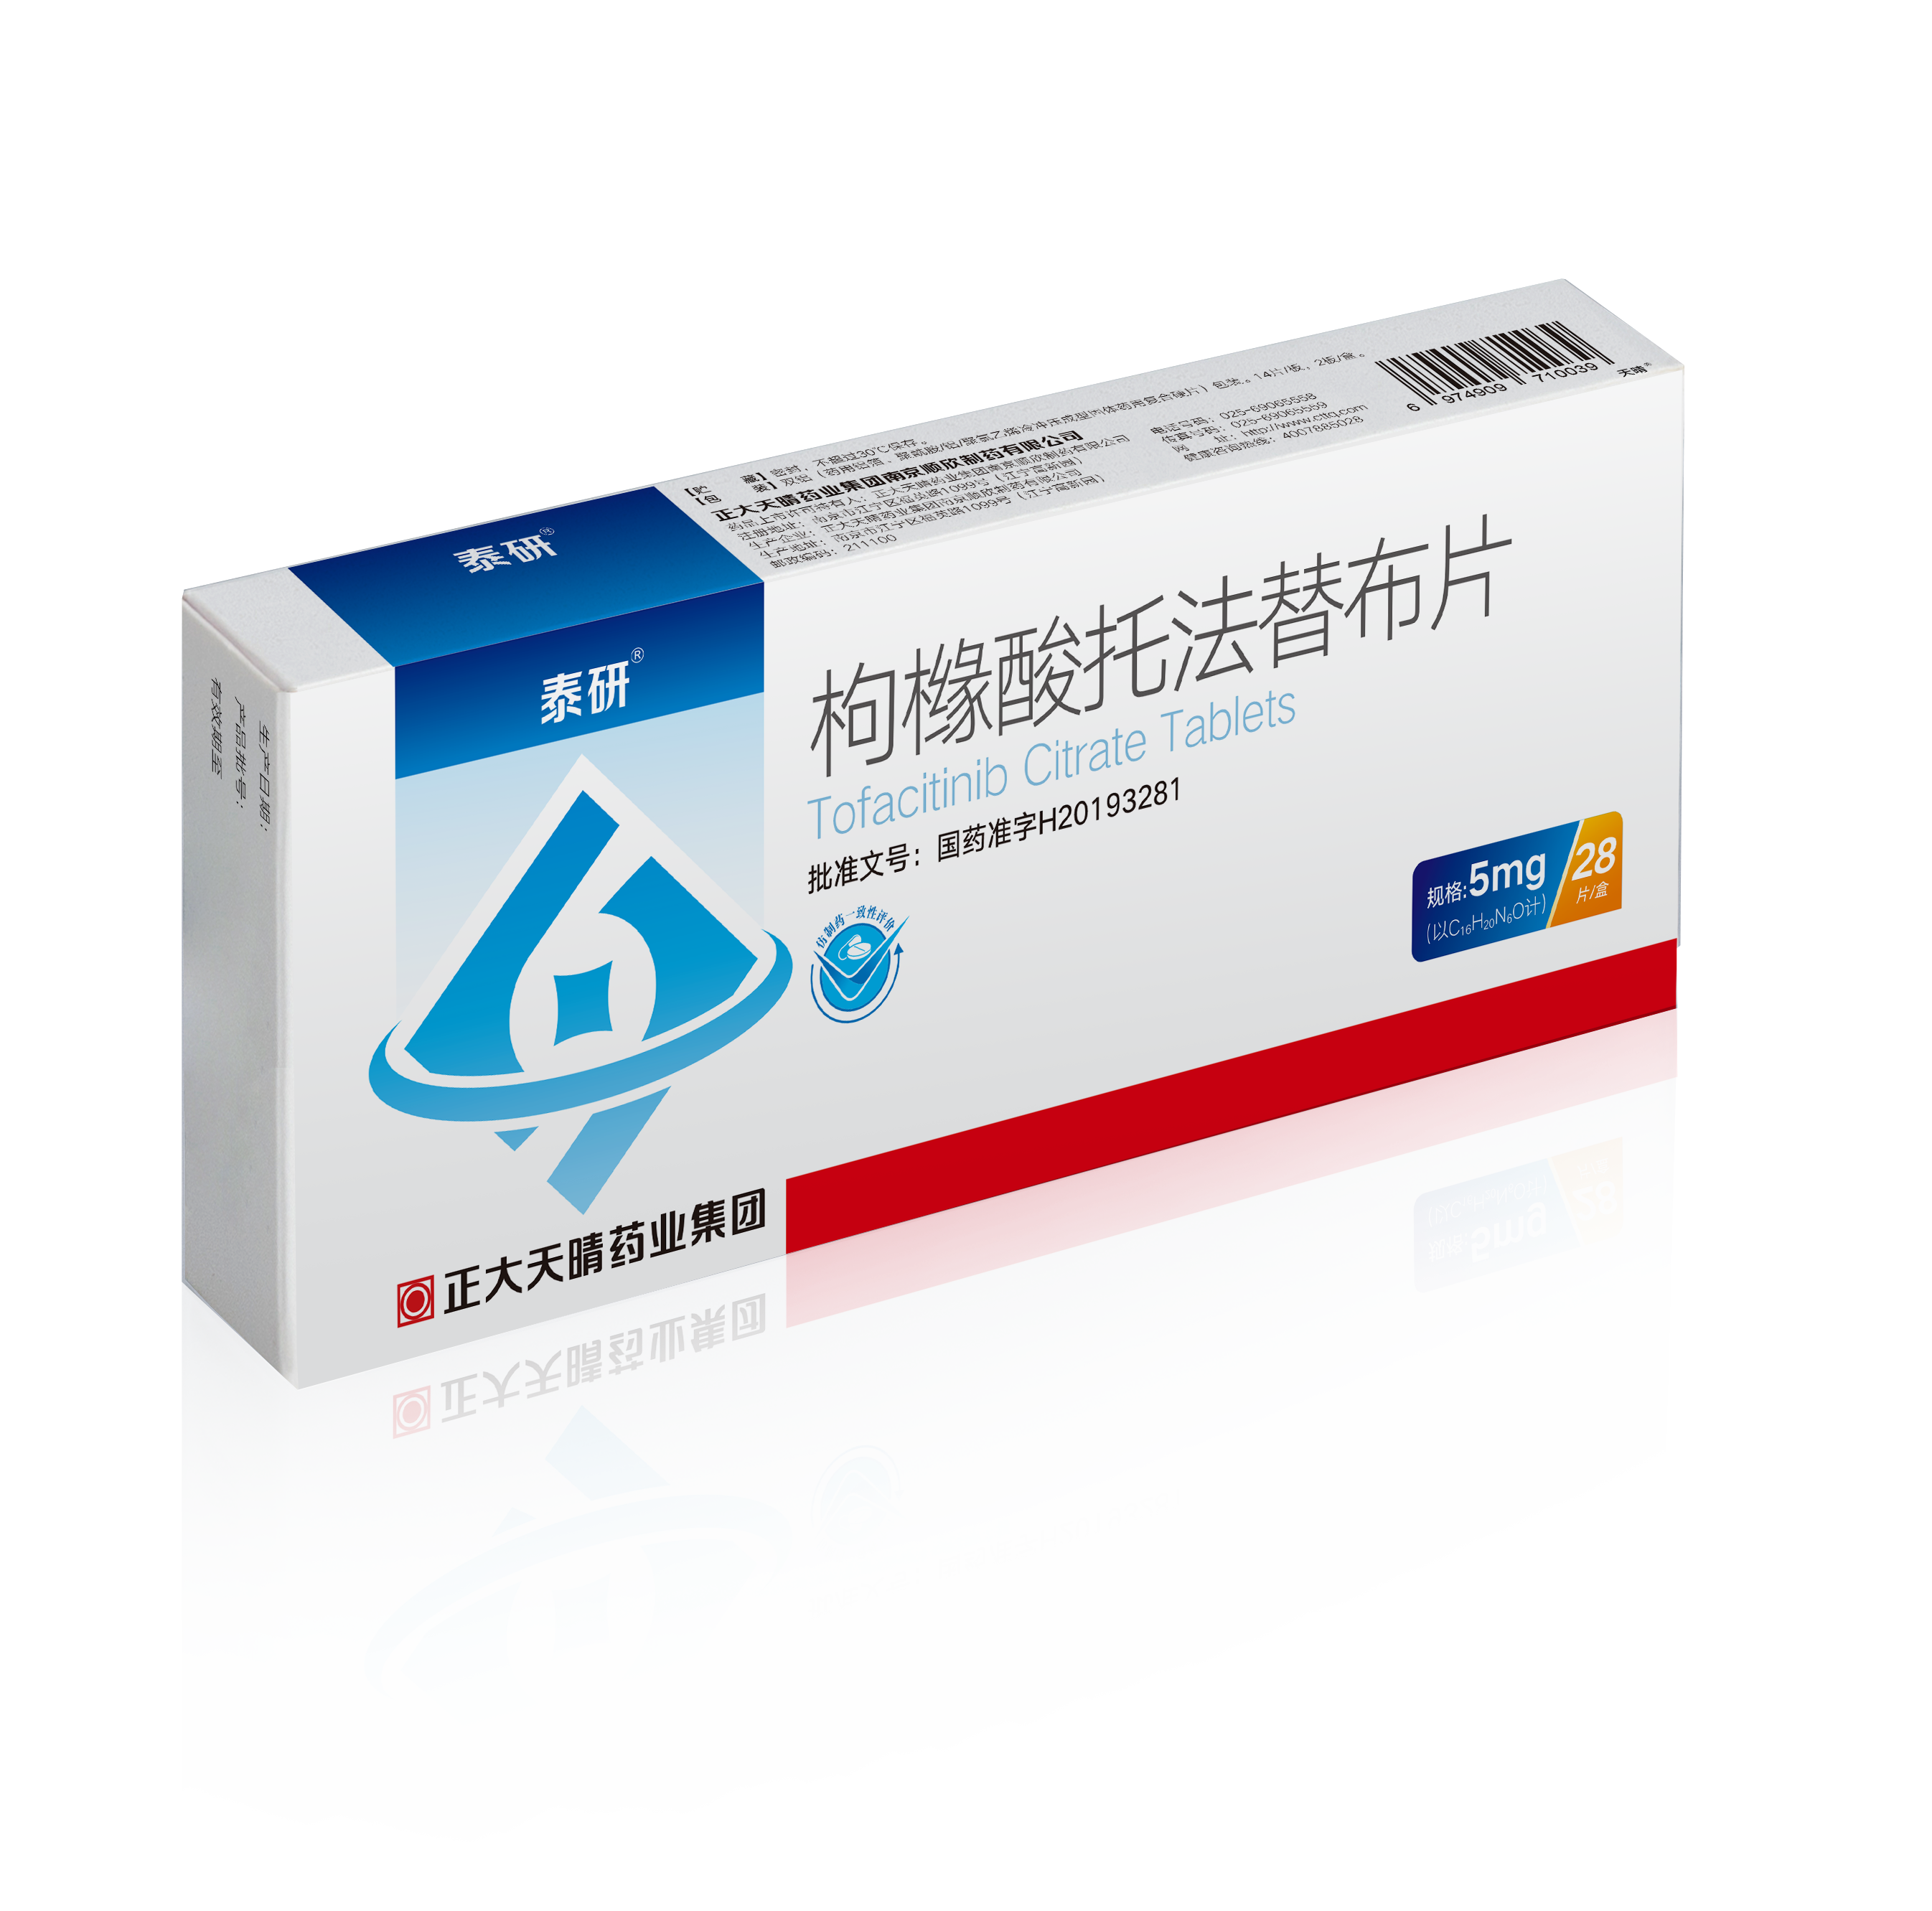 Tofacitinib Citrate Tablets